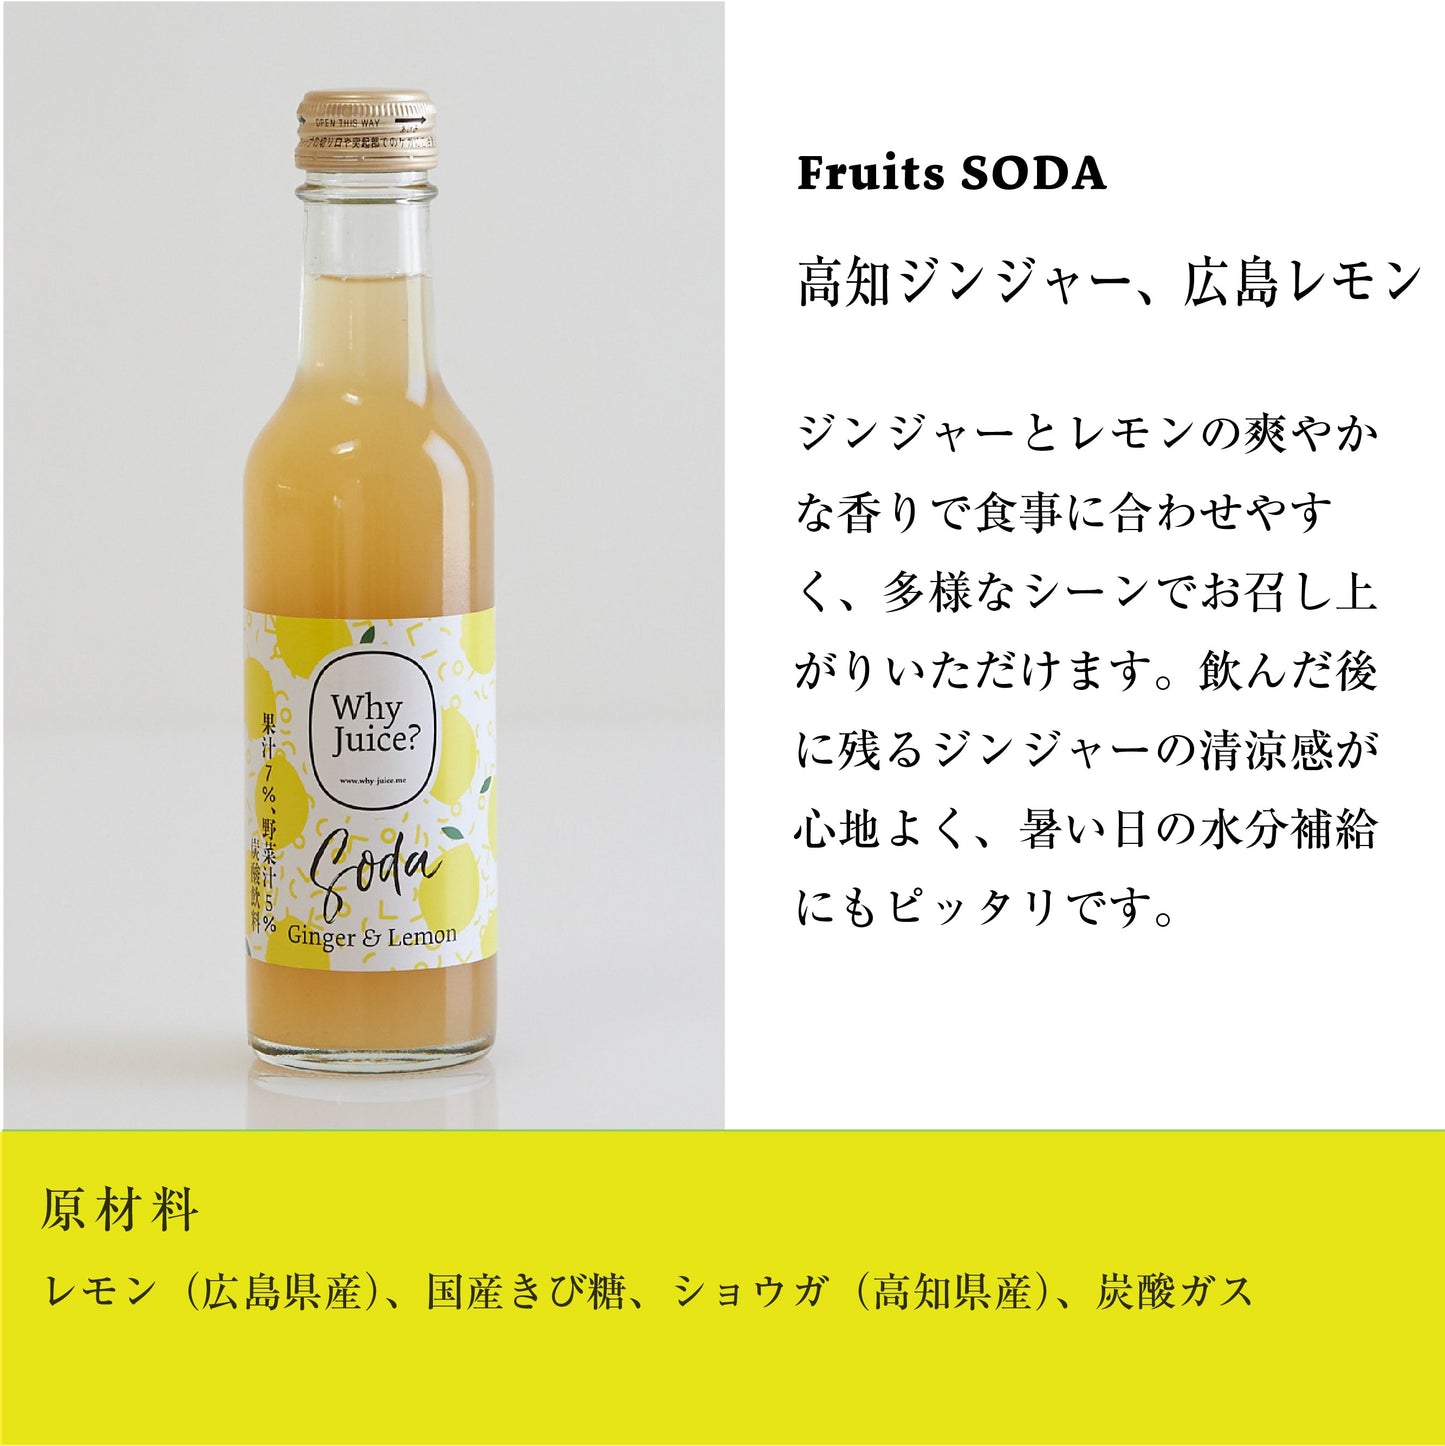 Fruits SODA 3種類ミックスセット (30本入)